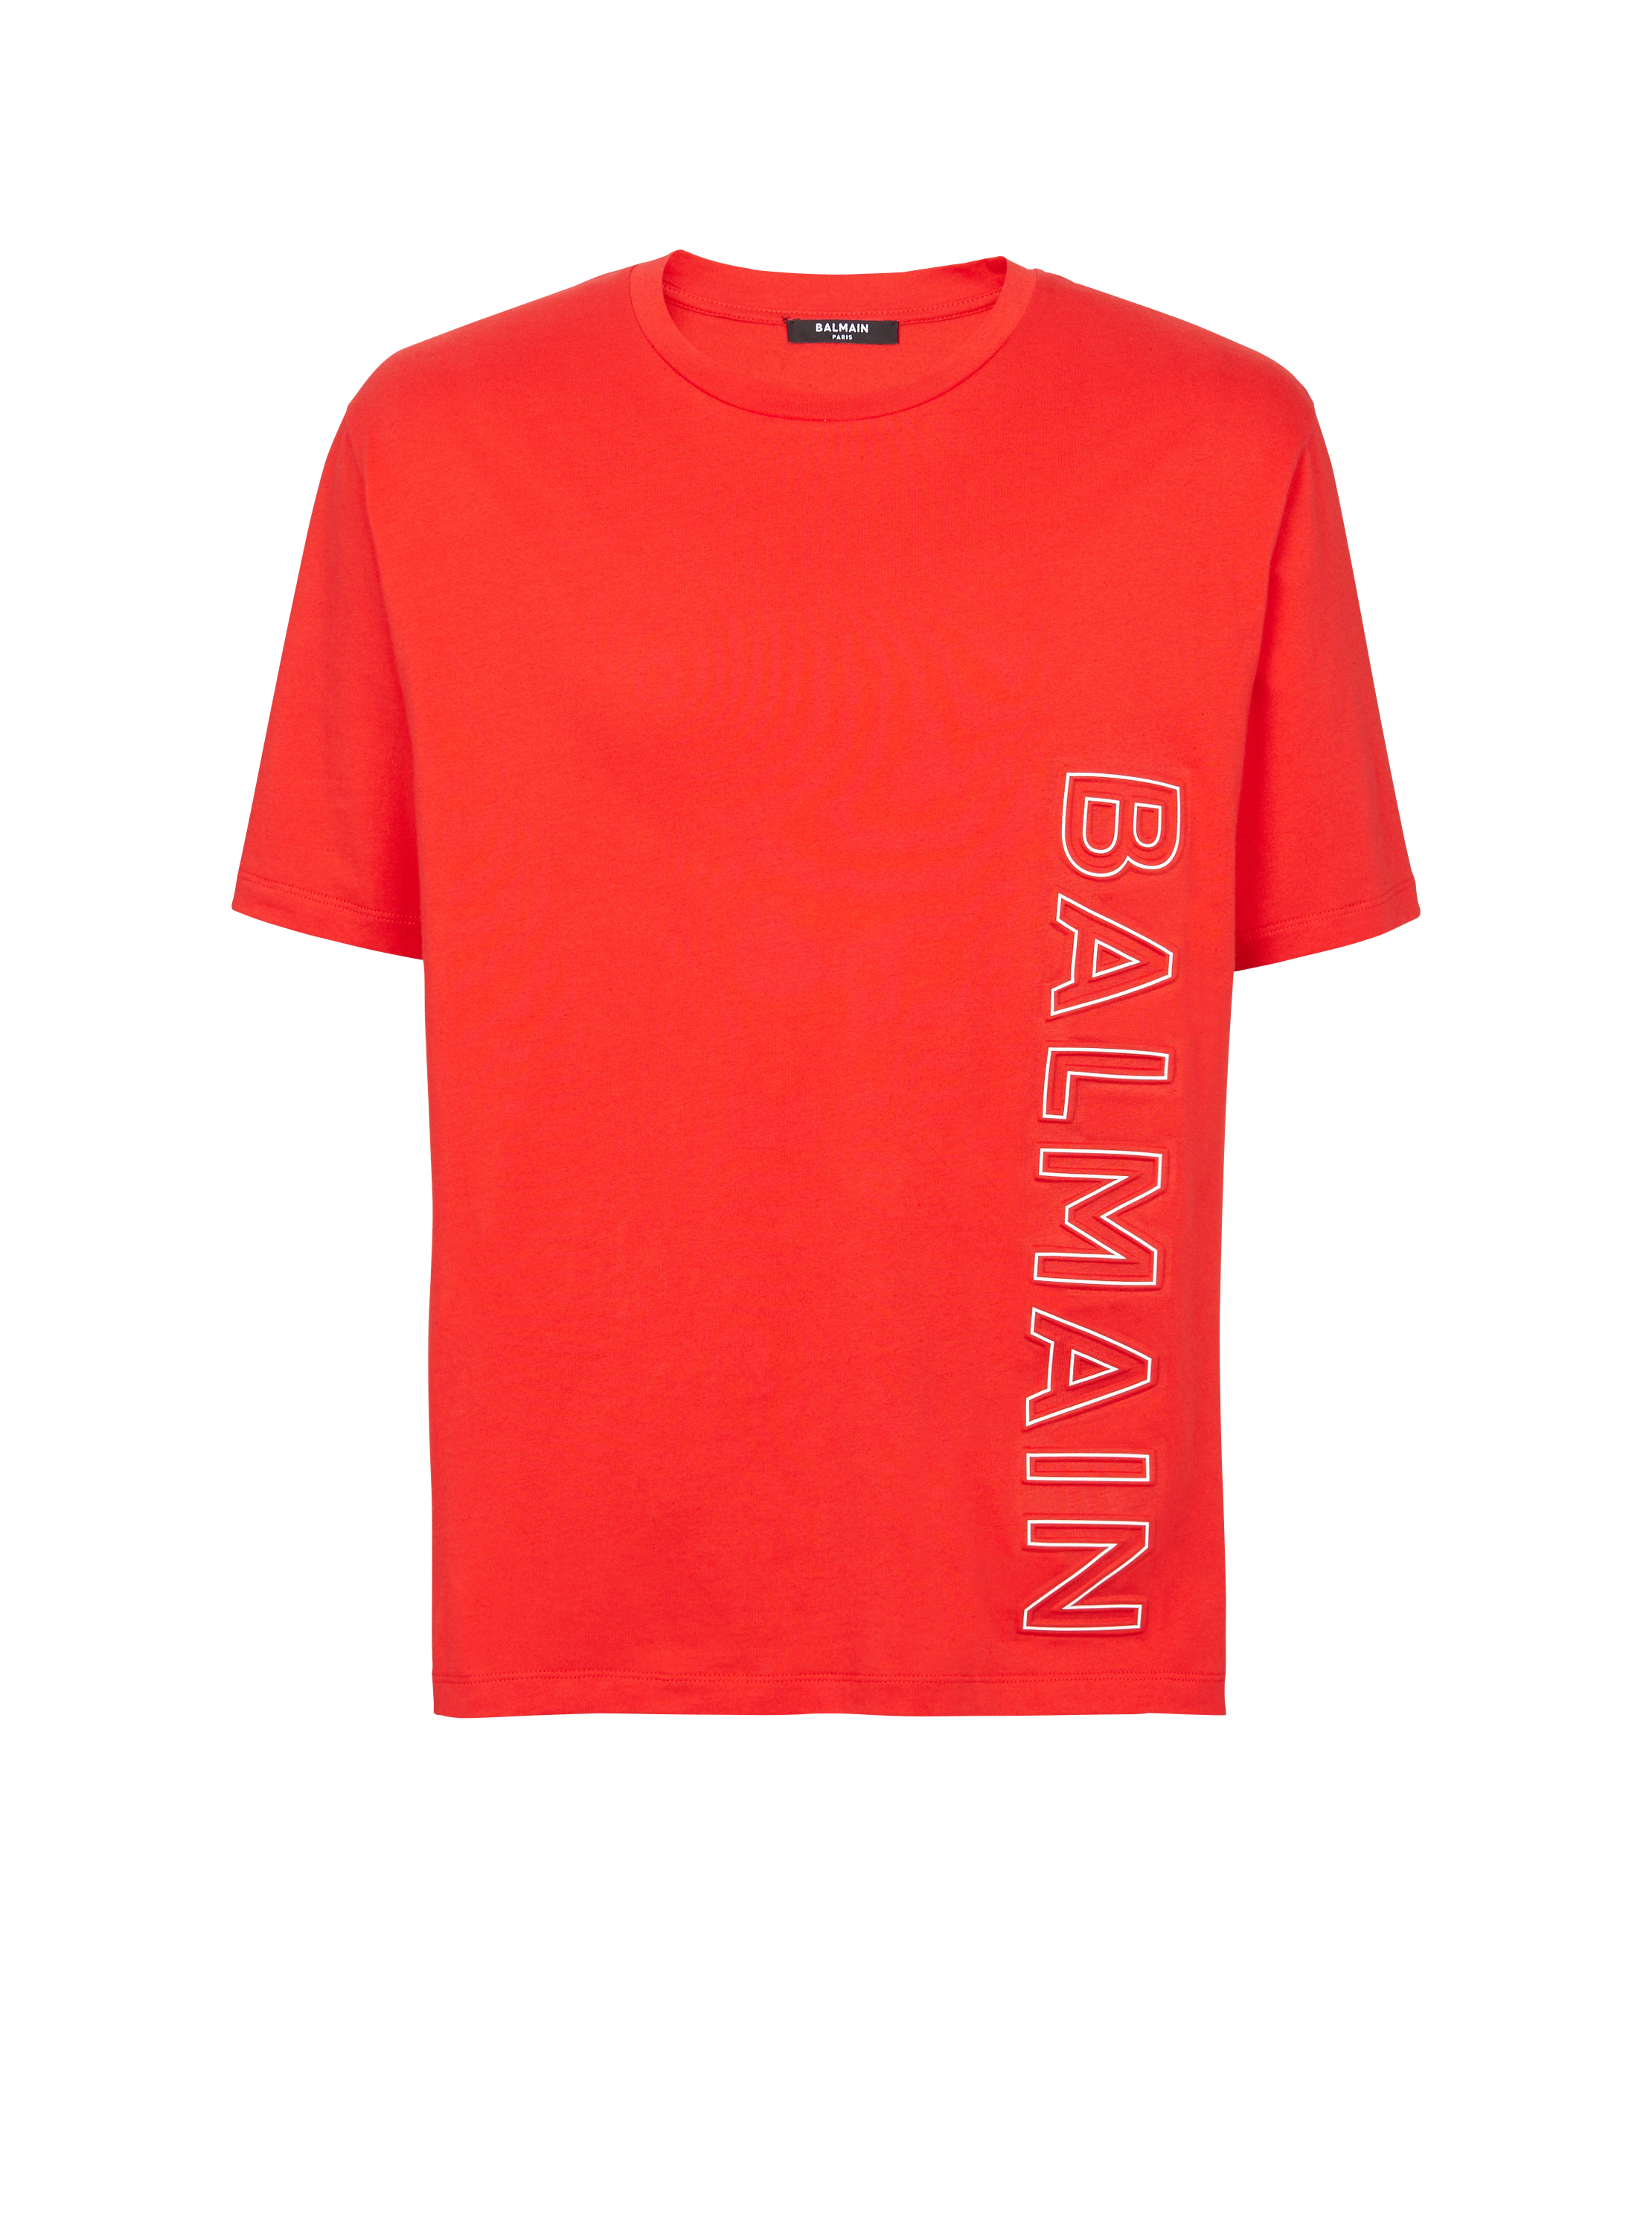 T-shirt Balmain embossé, rouge, hi-res